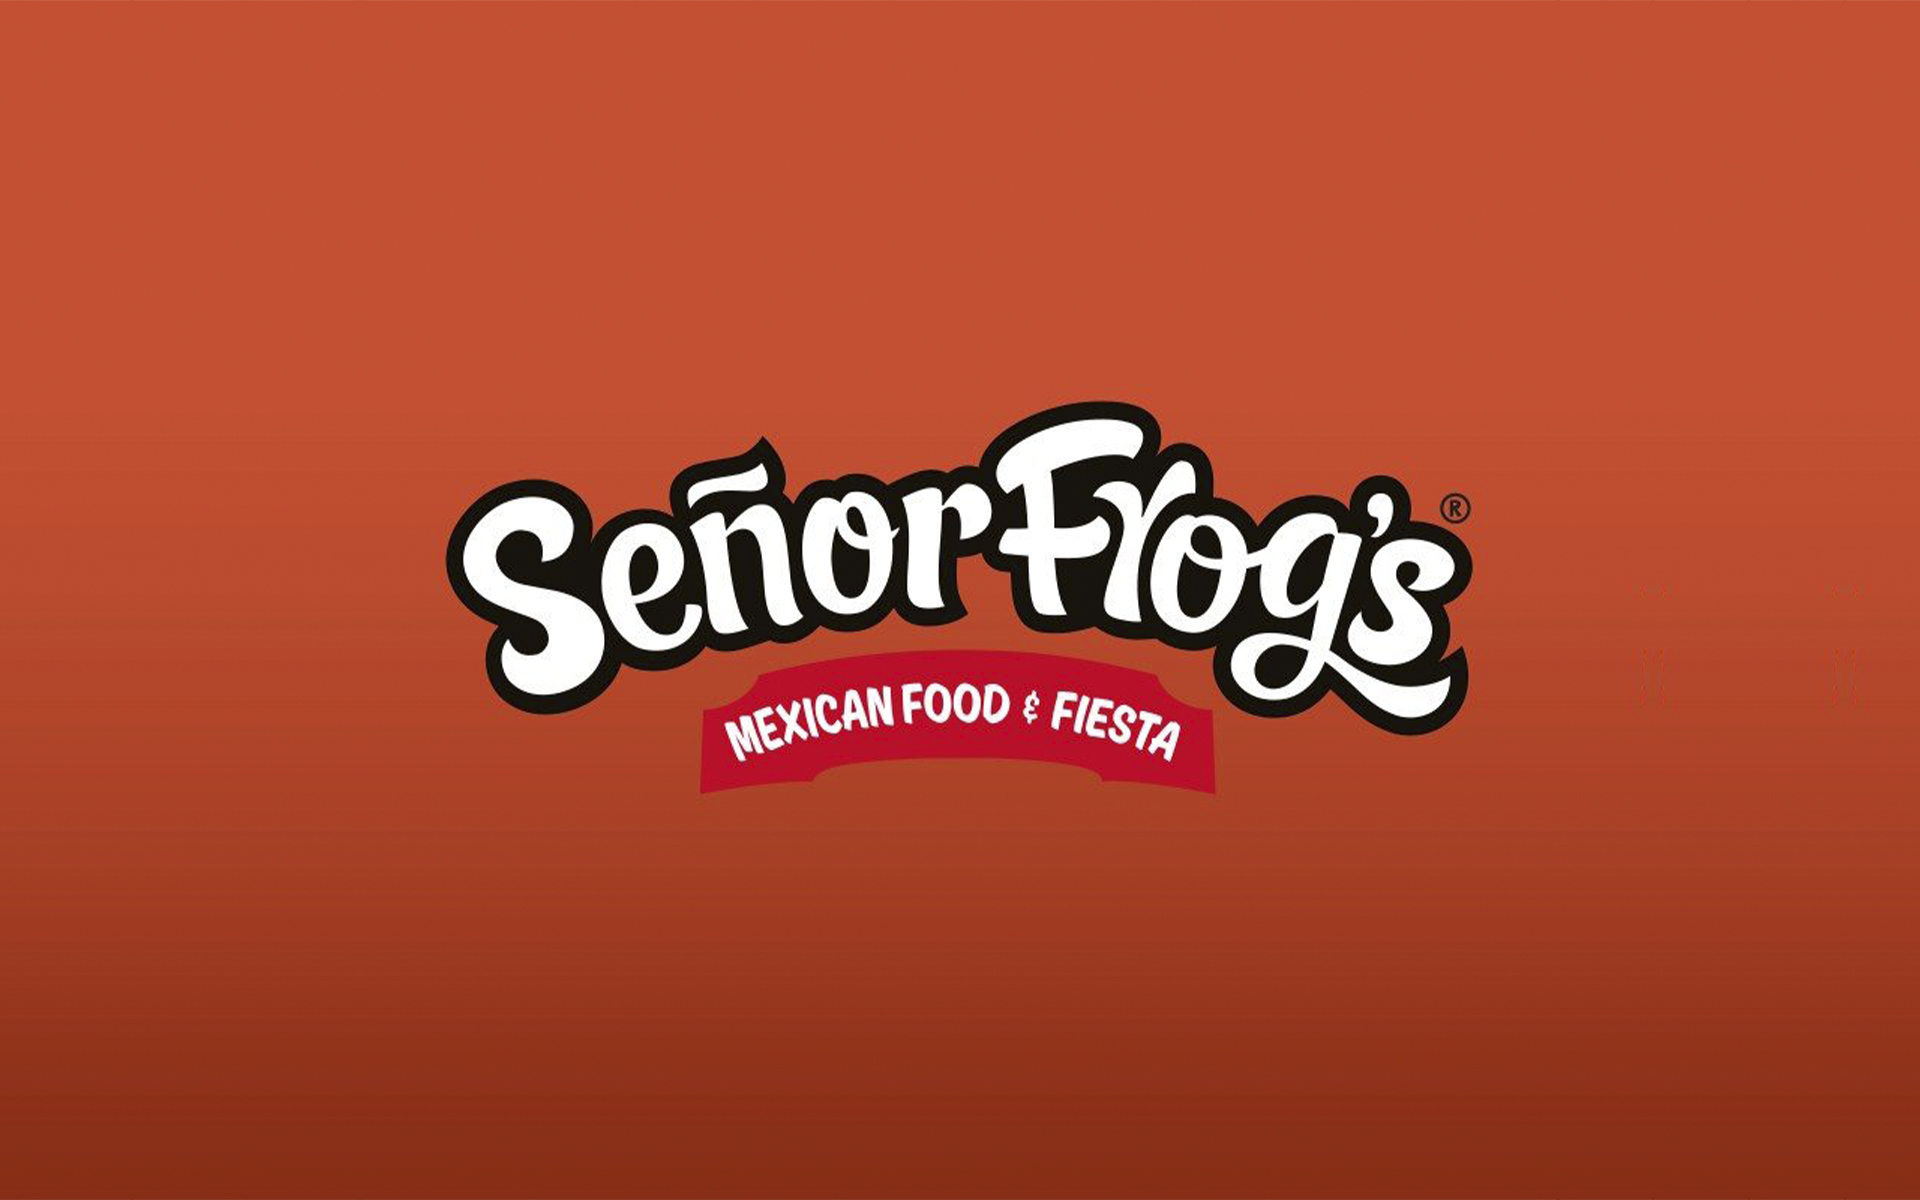 Senor Frog's Logo